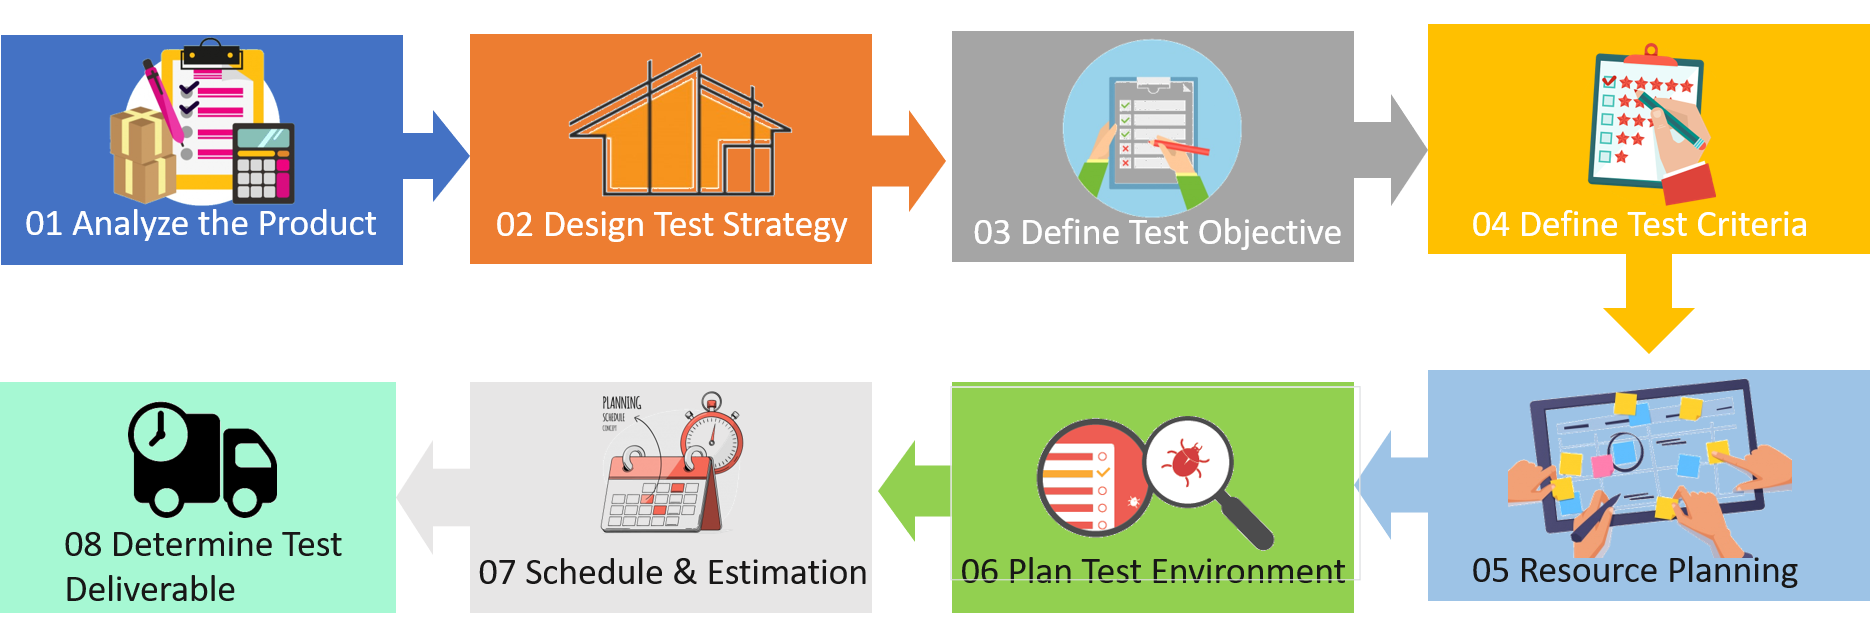 test planning-software-testing-life-cycle - edureka